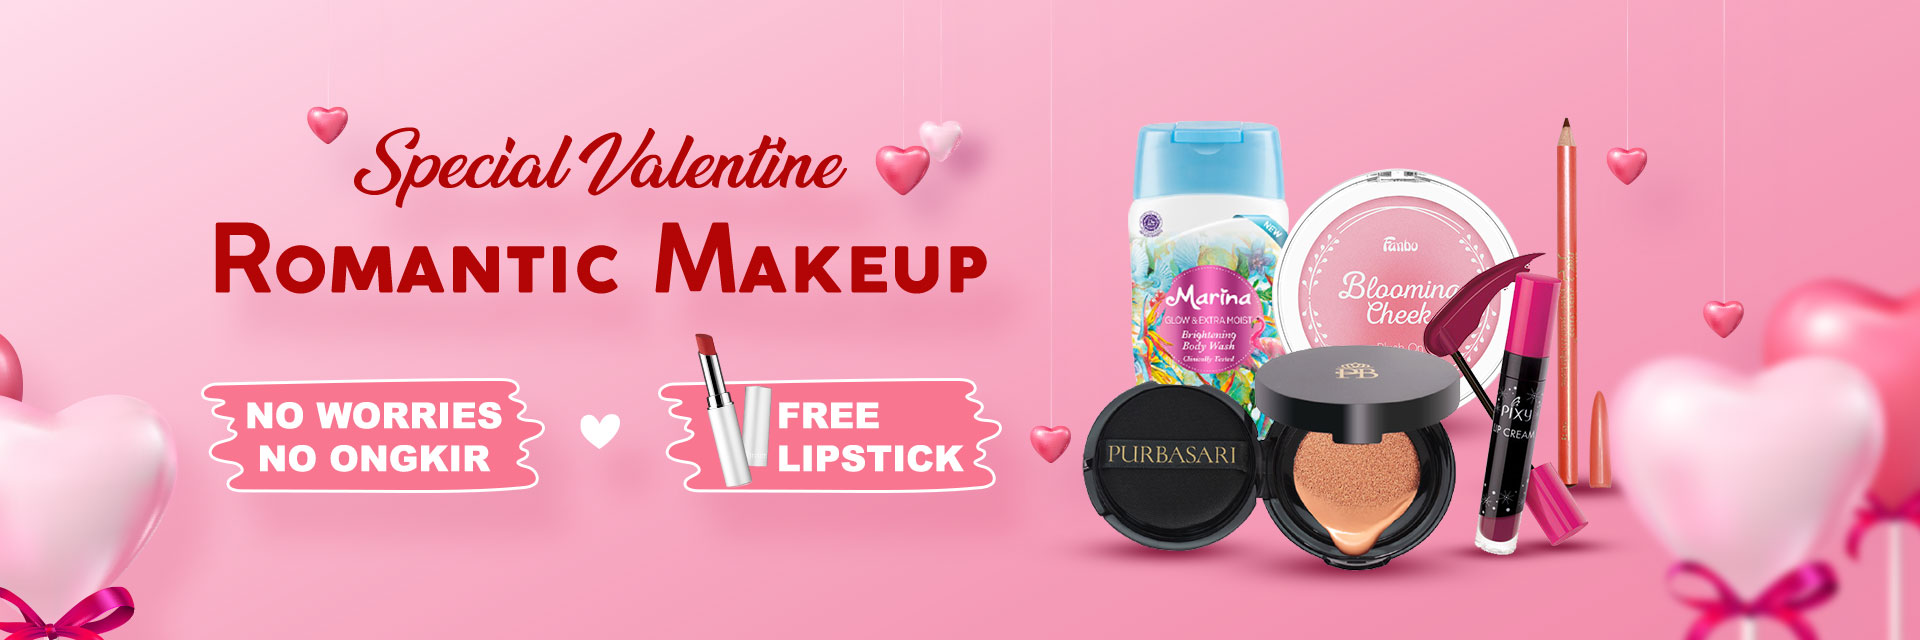 Special Valentine, Romantic Makeup | No Worries, No Ongkir